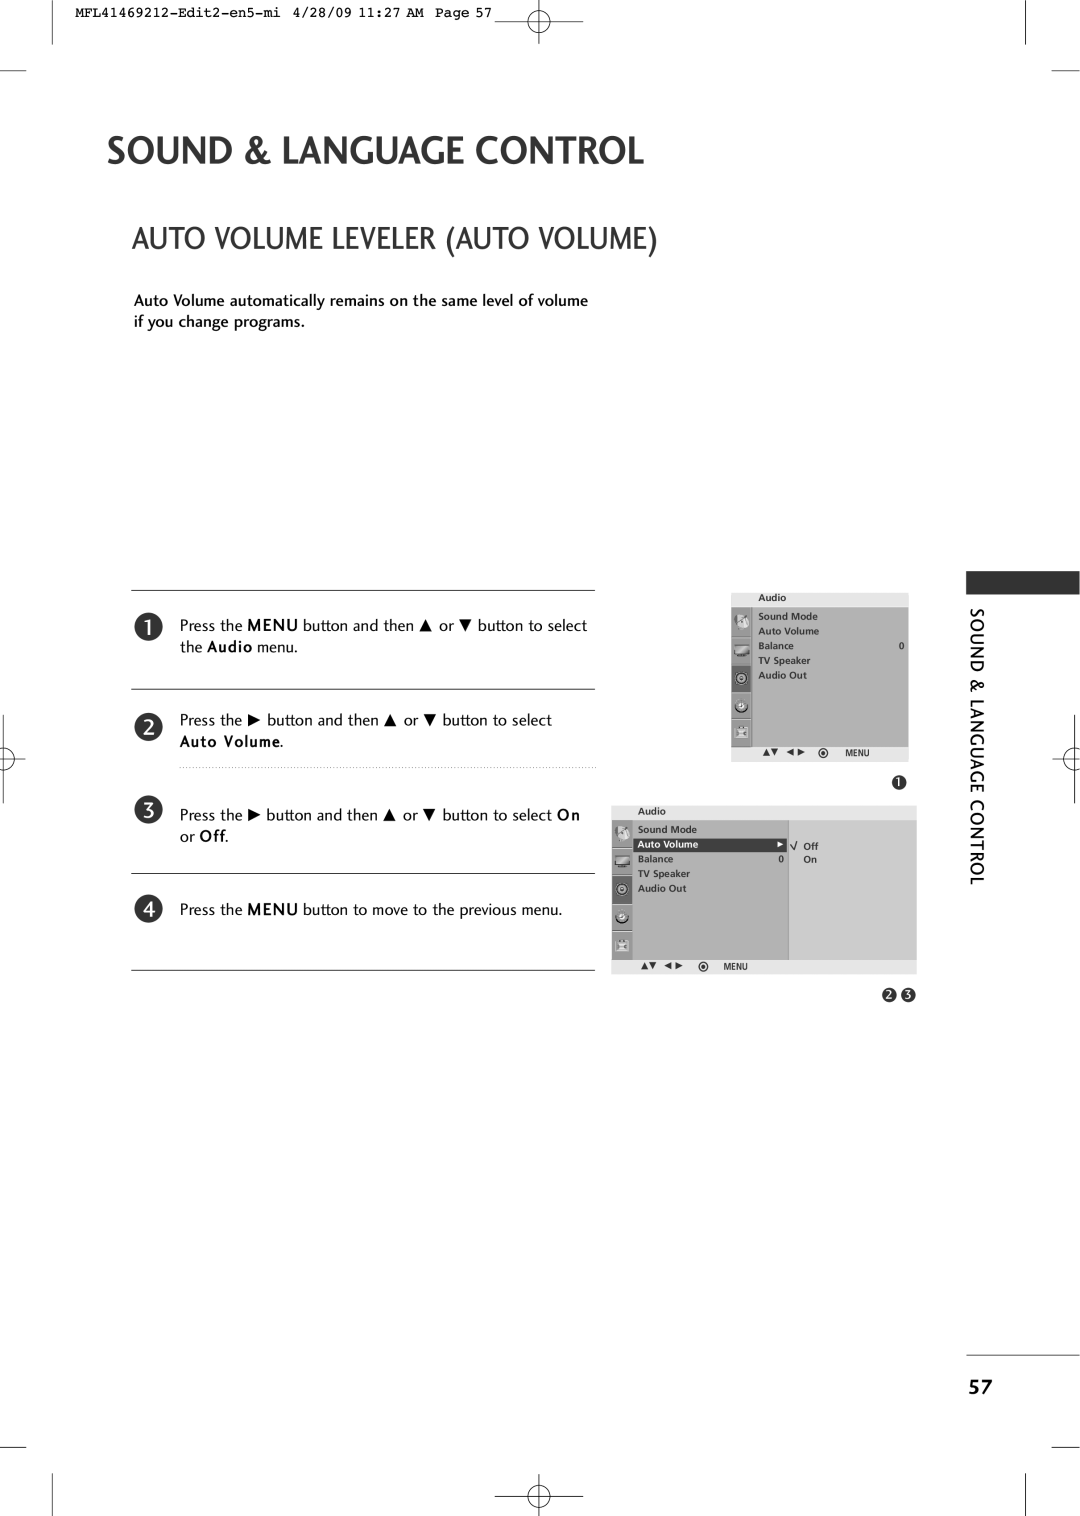 LG Electronics 2230R-MA manual Sound & Language Control, Auto Volume Leveler Auto Volume 